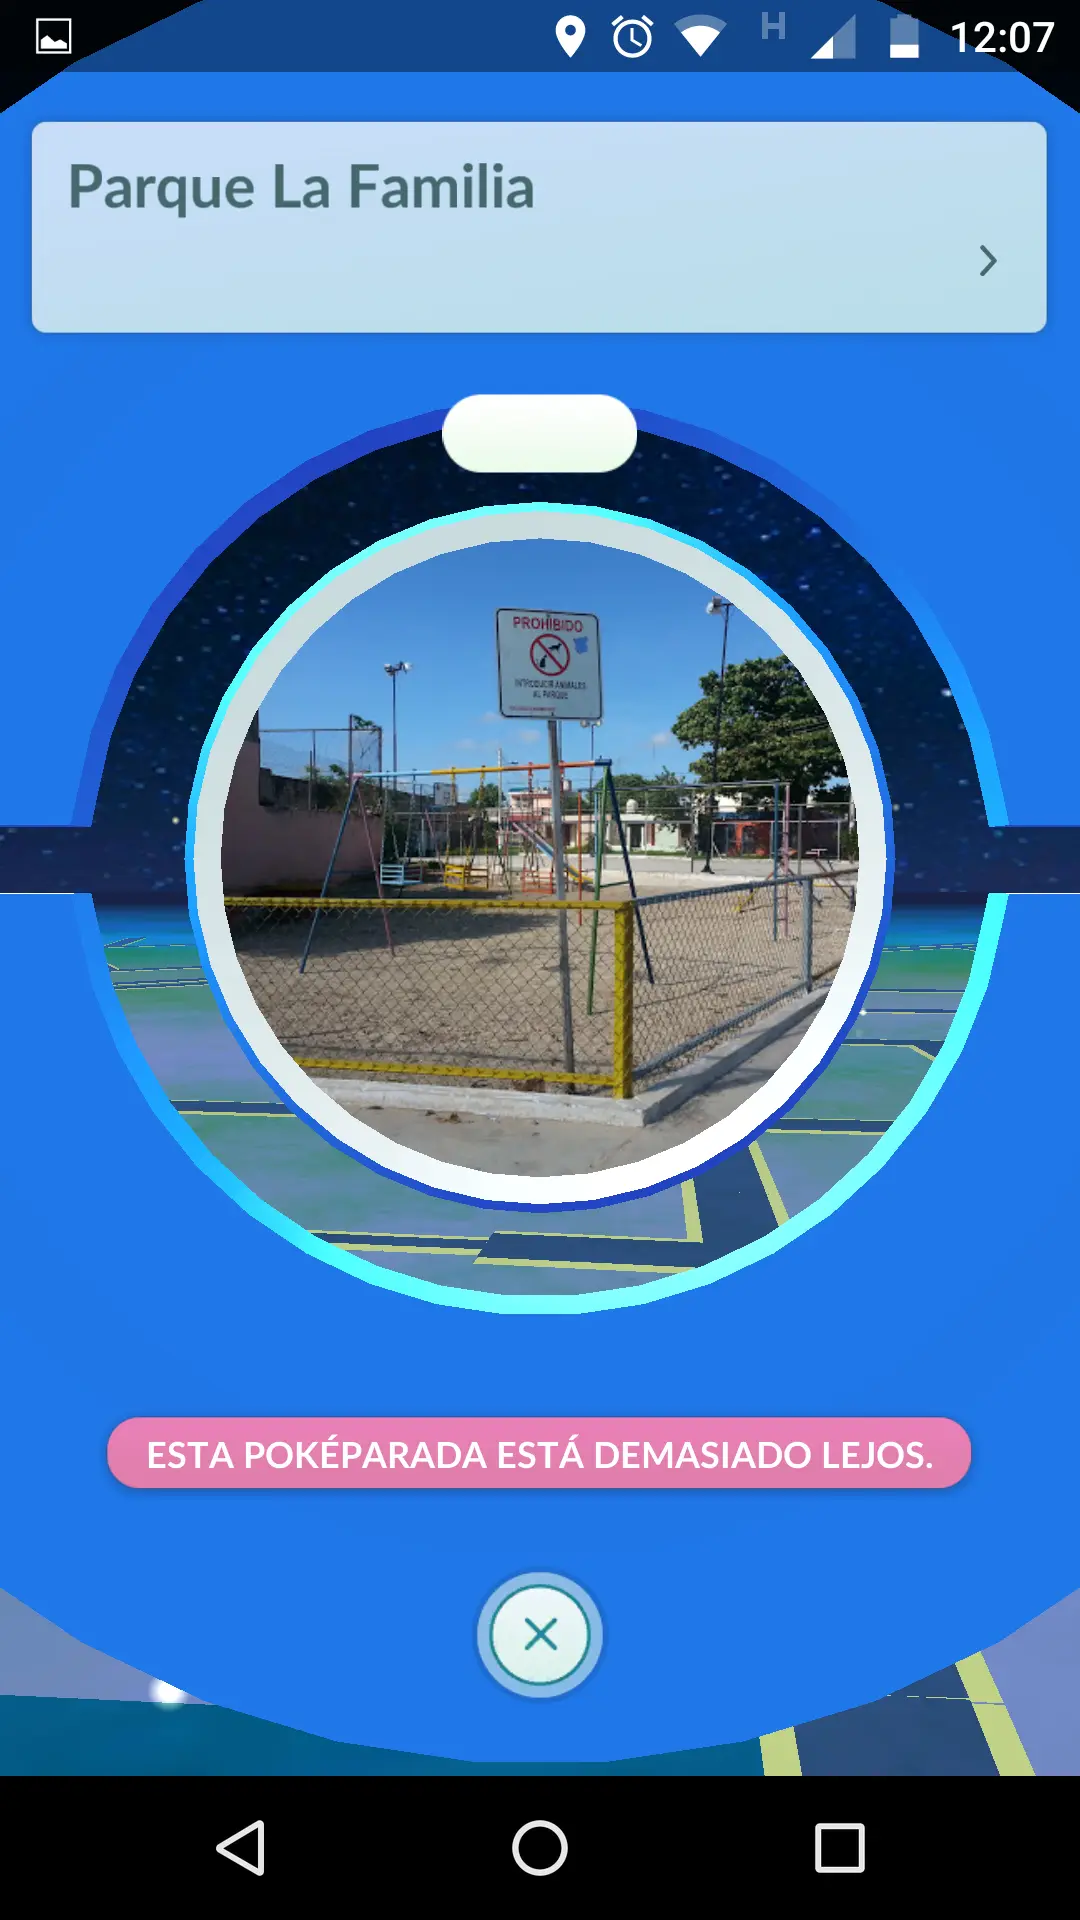 Descarga Pokemon Go disponible Android Mexico Latam (5)